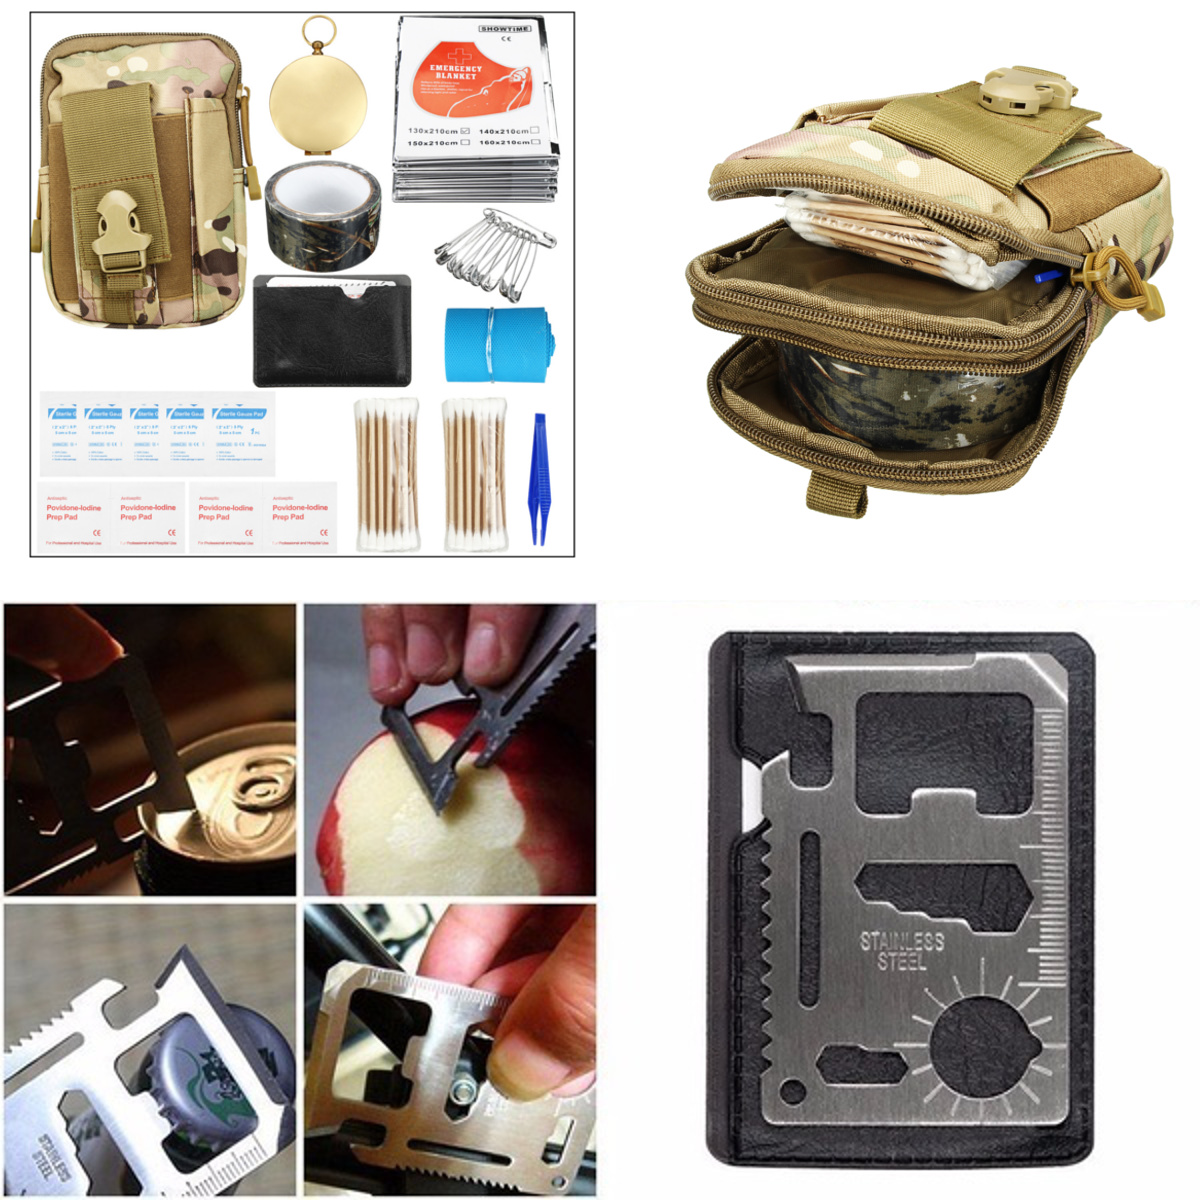 185Pcs-Survival-Tools-Kit-Emergency-Survival-Kit-Multi-Tools-First-Aid-Supplies-Survival-Gear-EDC-Ga-1427132-1